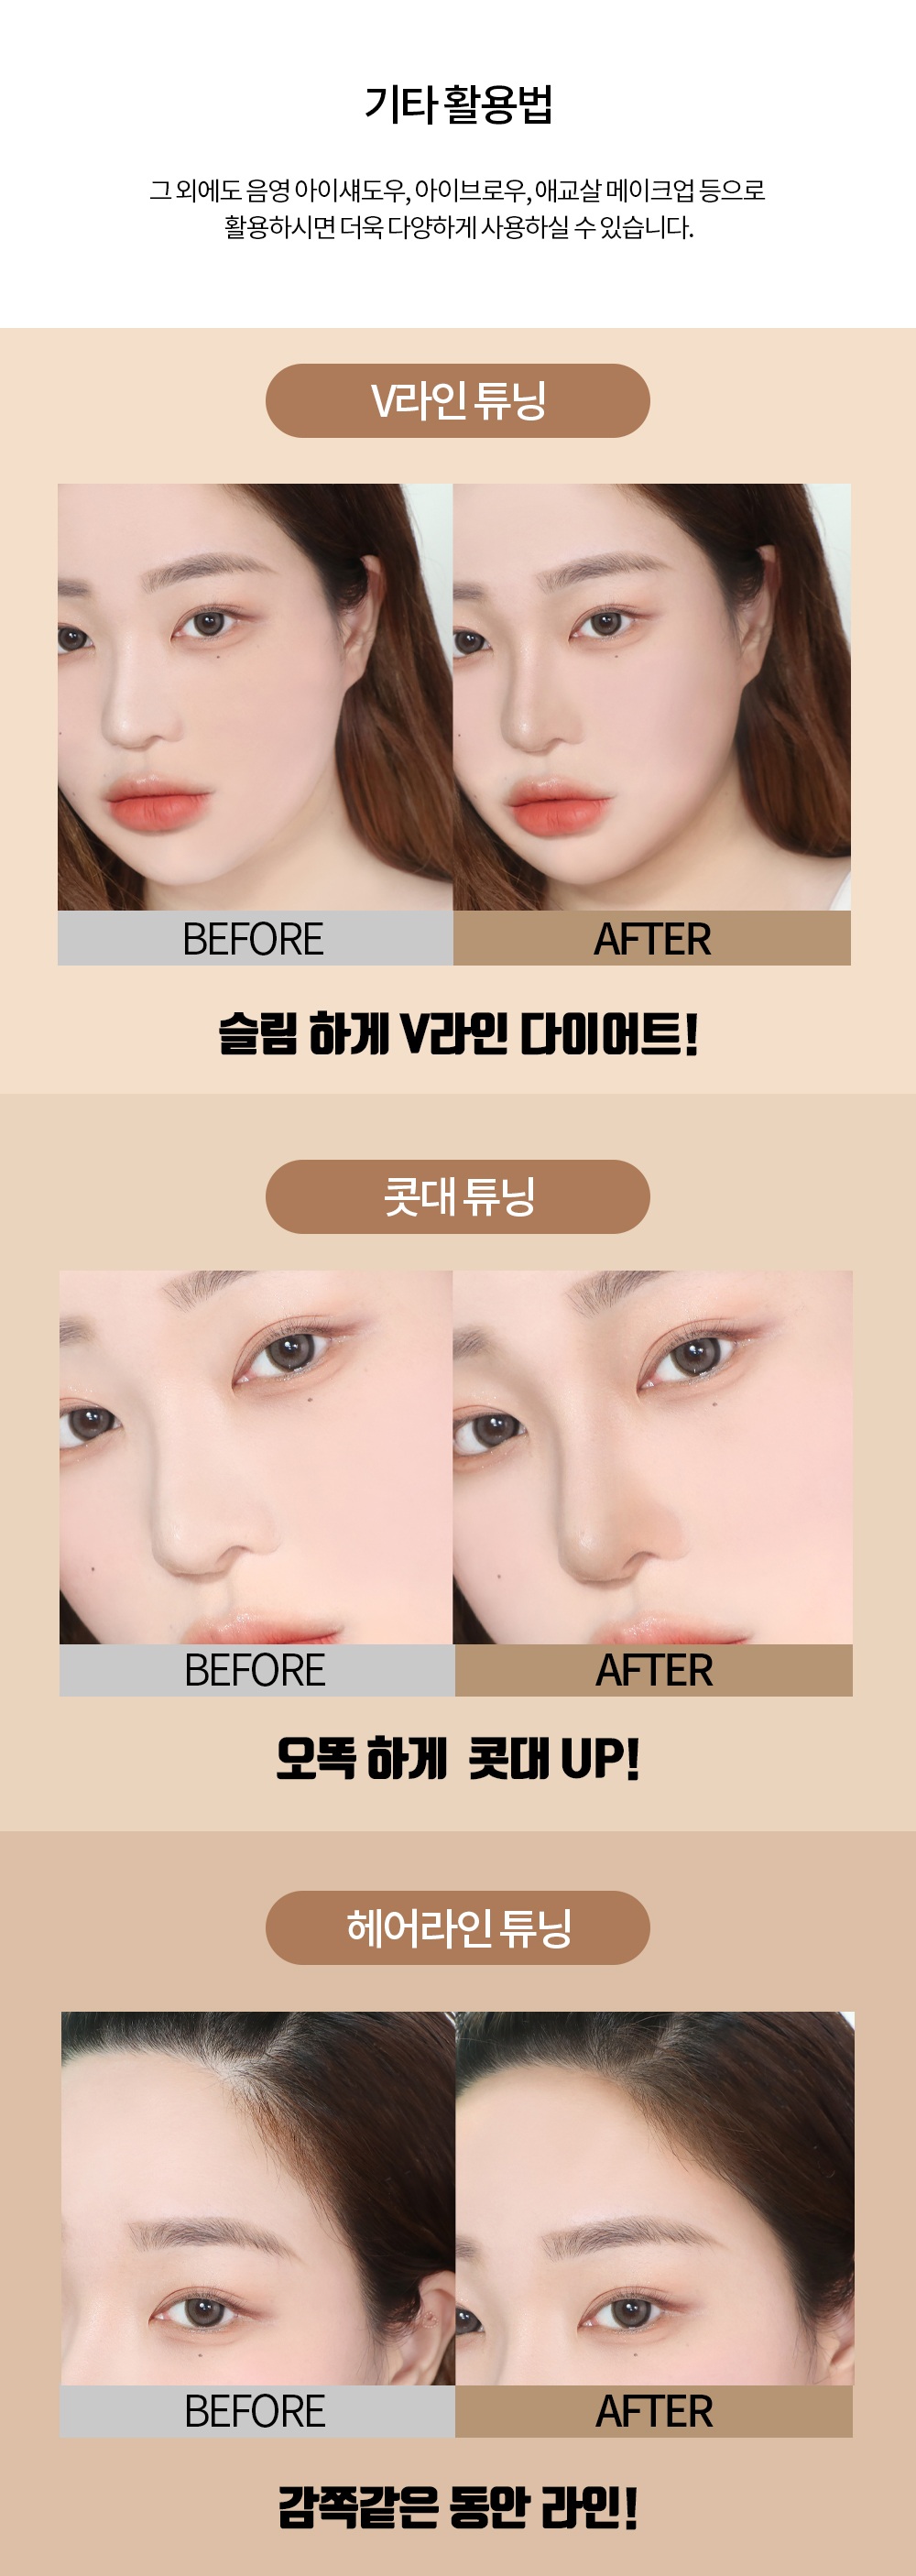 Holika Holika Tone Tuning Shading korean cosmetic makeup product online shop malaysia China indonesia5